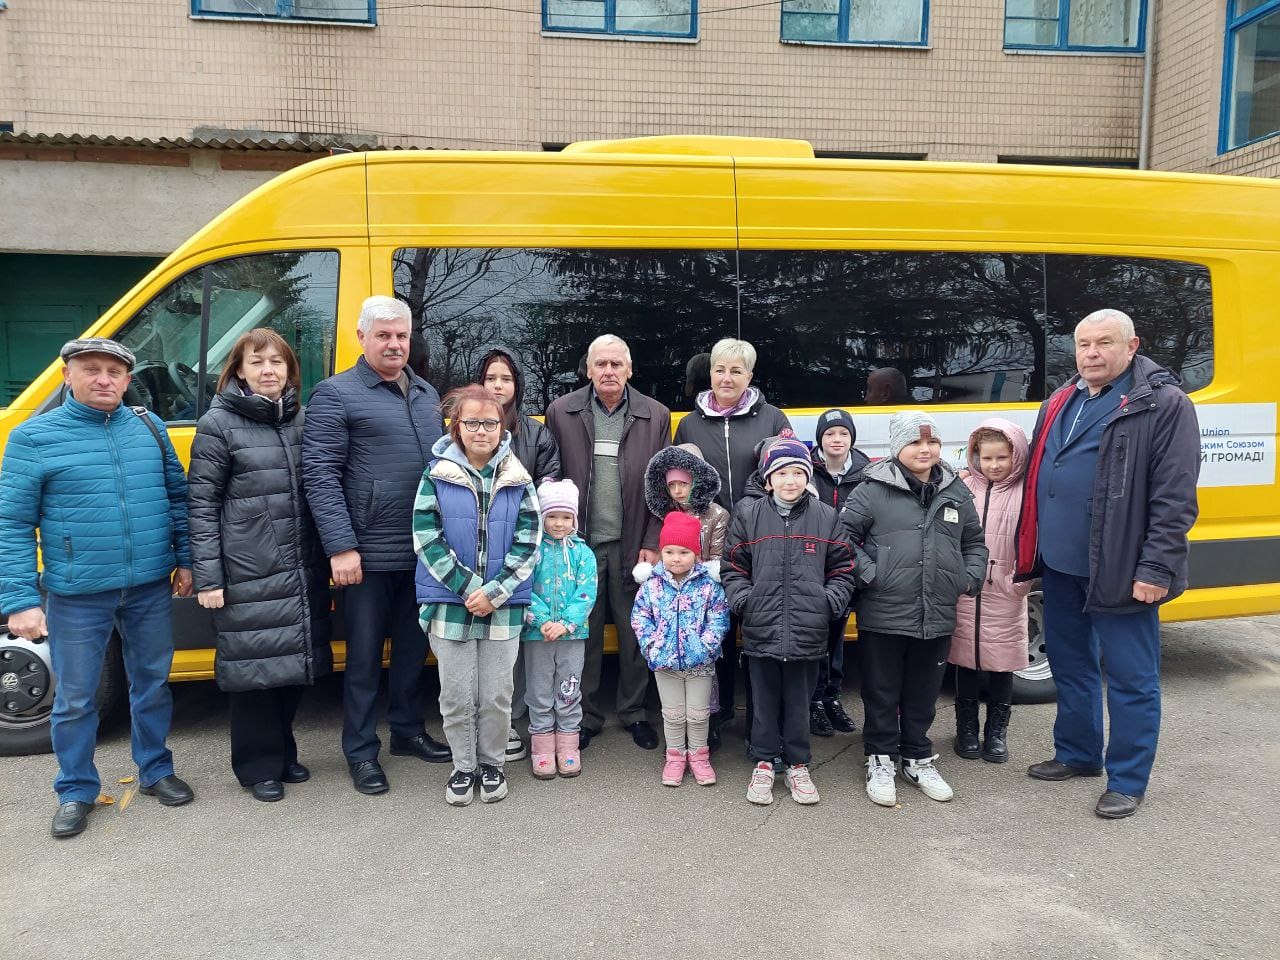 A new bus for community schoolchildren